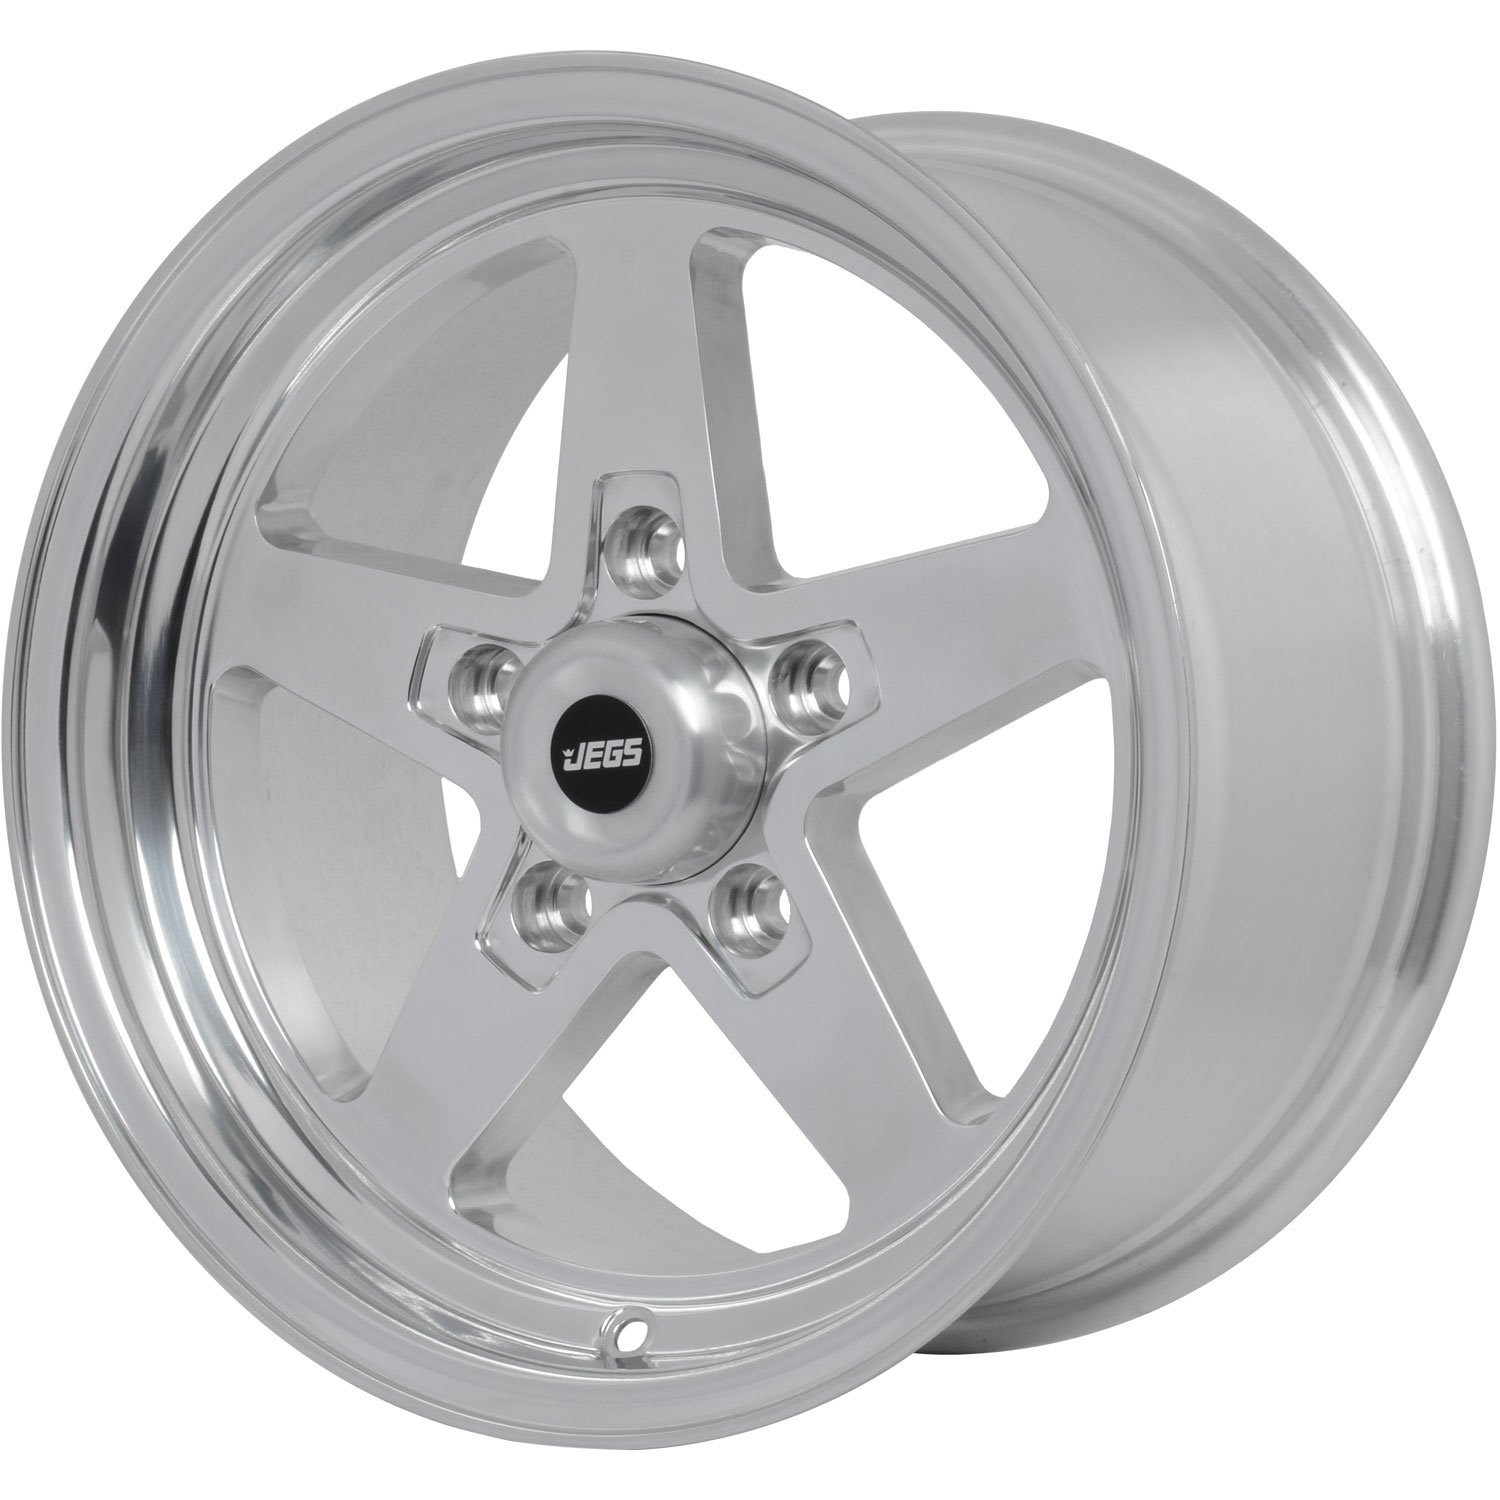 SSR Star Wheel [Size: 15" x 8"] Polished